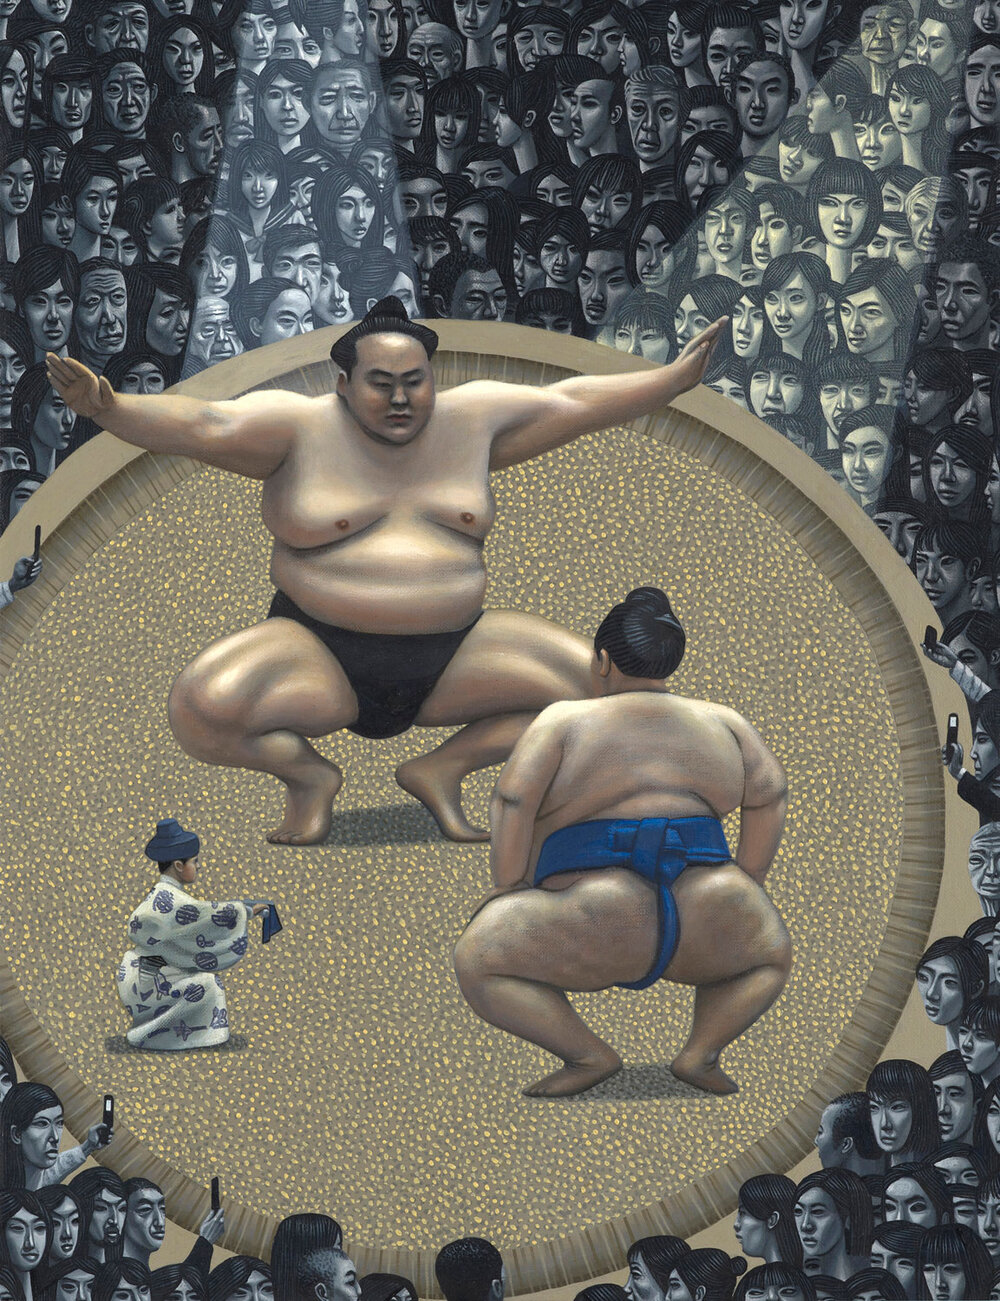 reservedele Koordinere akademisk Limited edition fine art print of Sumo painting — Carl Randall